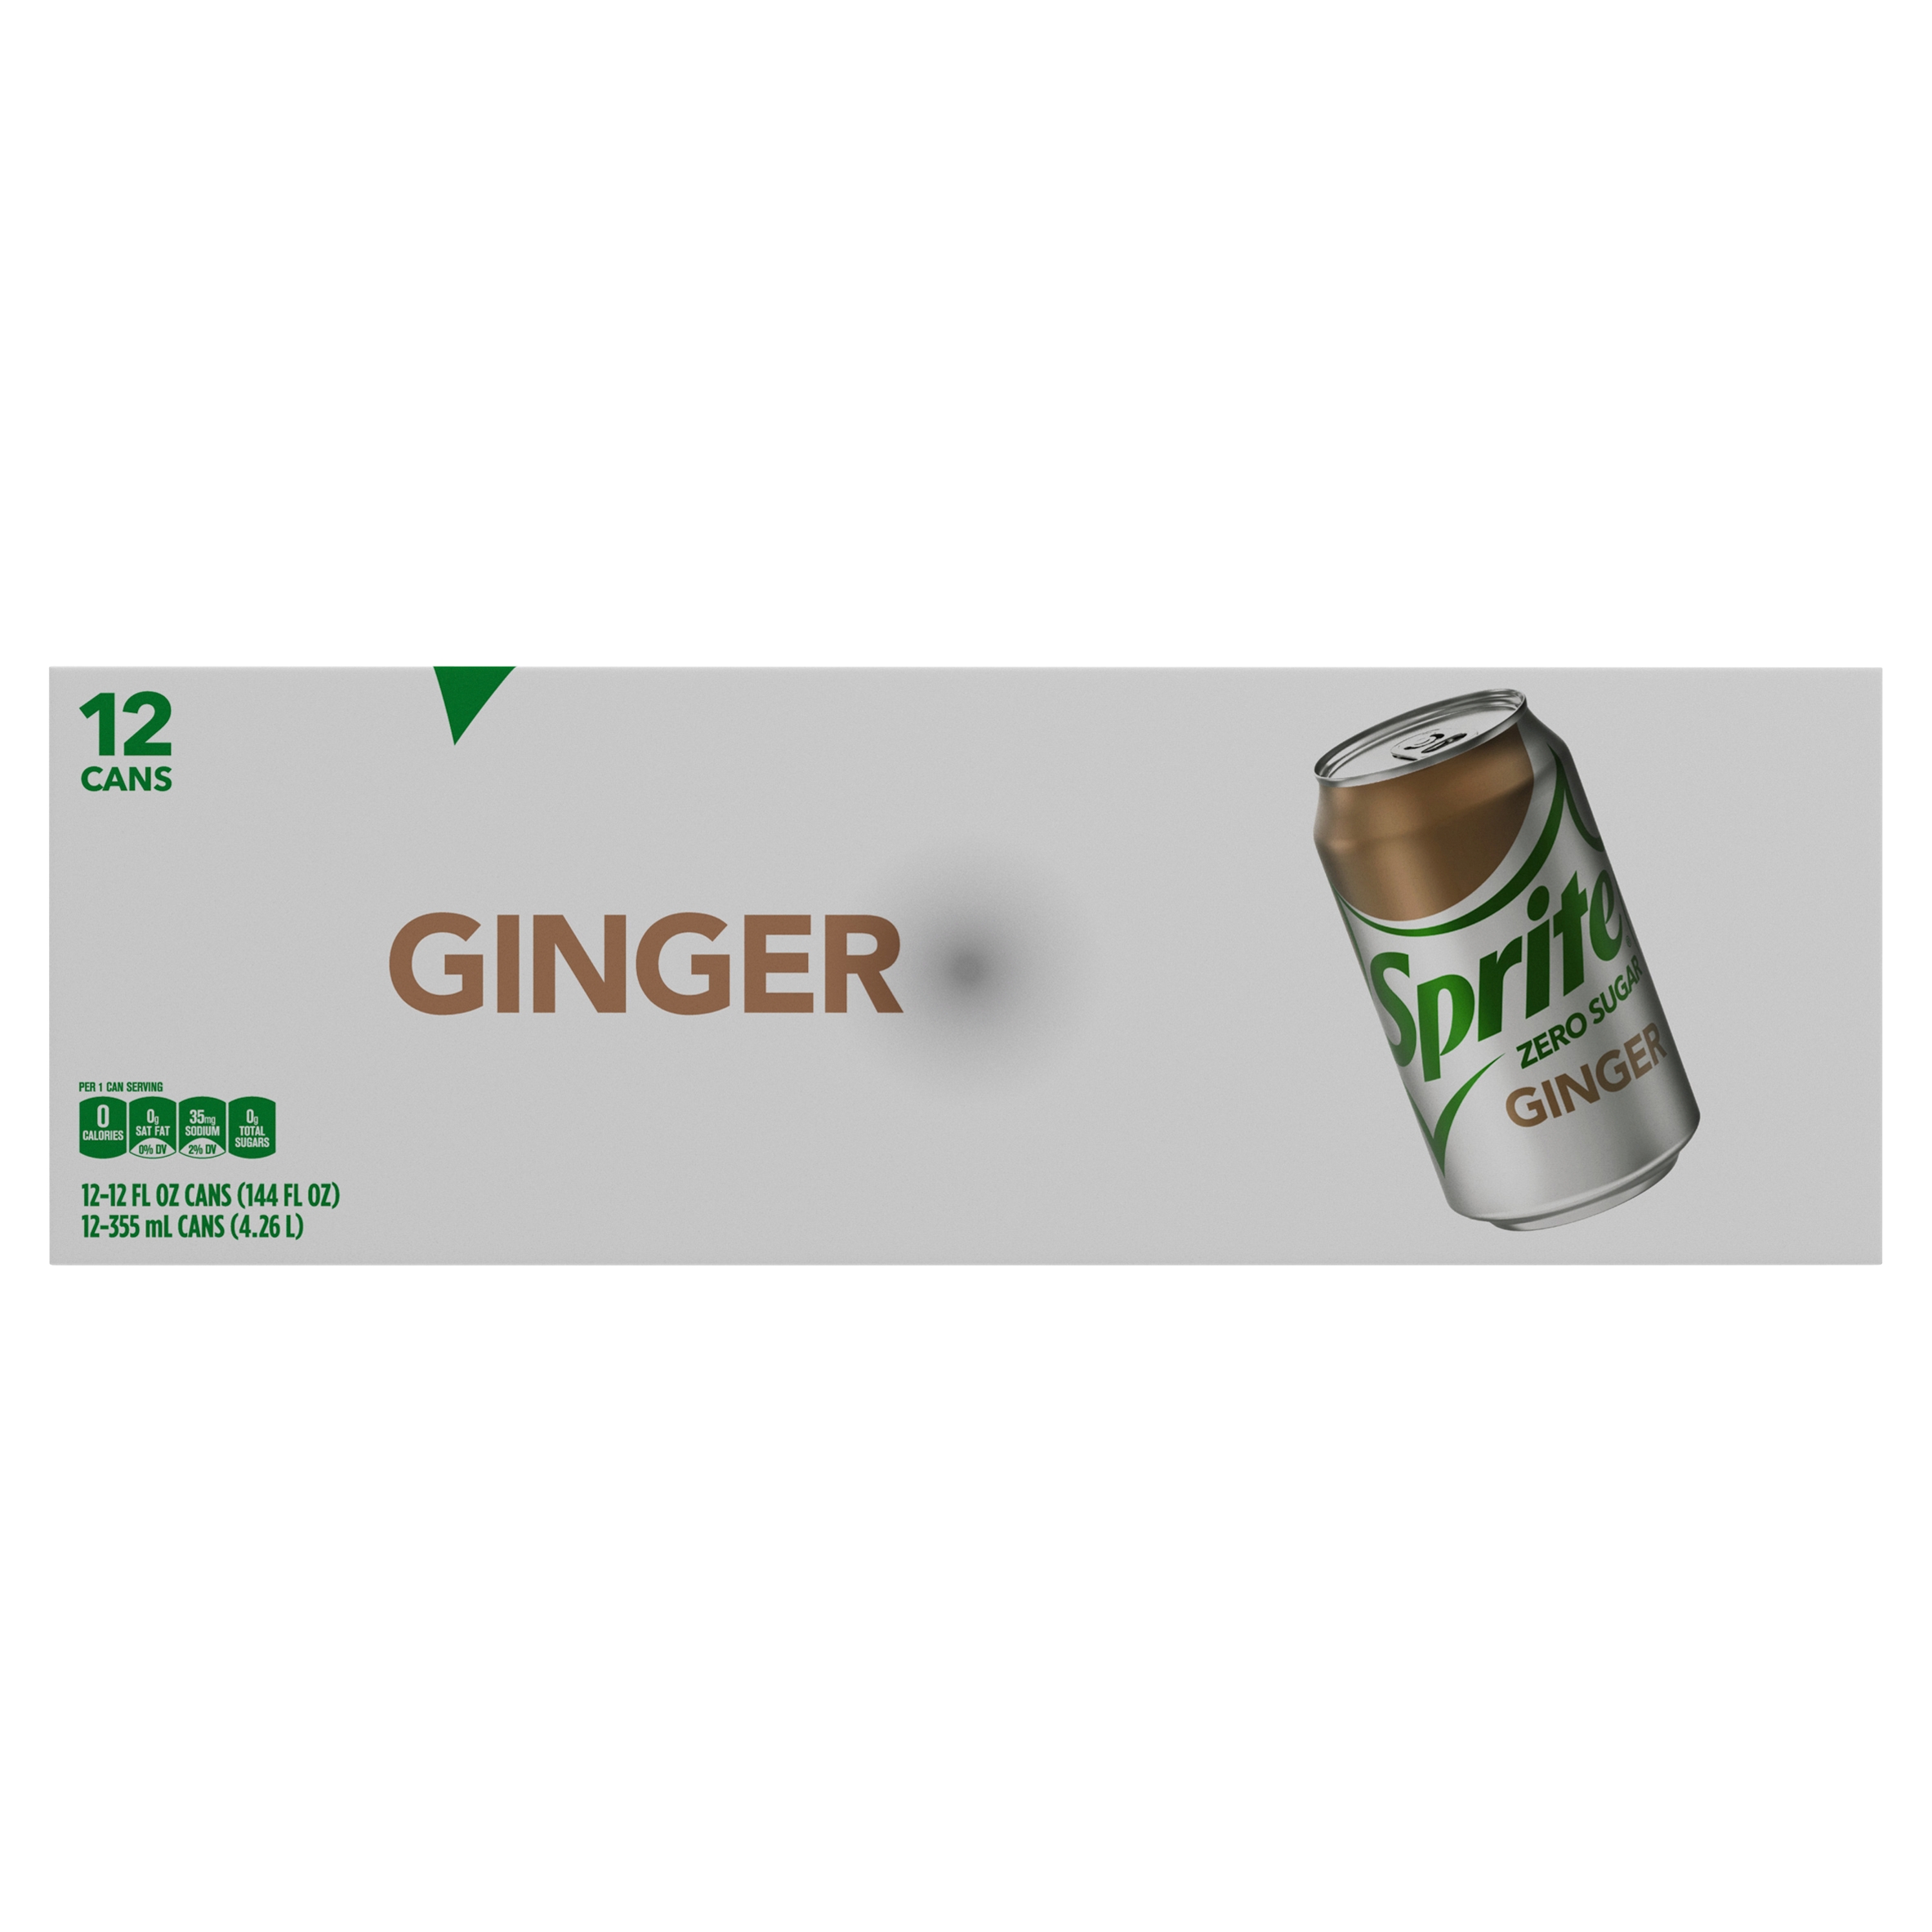 Sprite Ginger Zero Sugar Fridge Pack Cans, 12 fl oz, 12 Pack - image 4 of 8